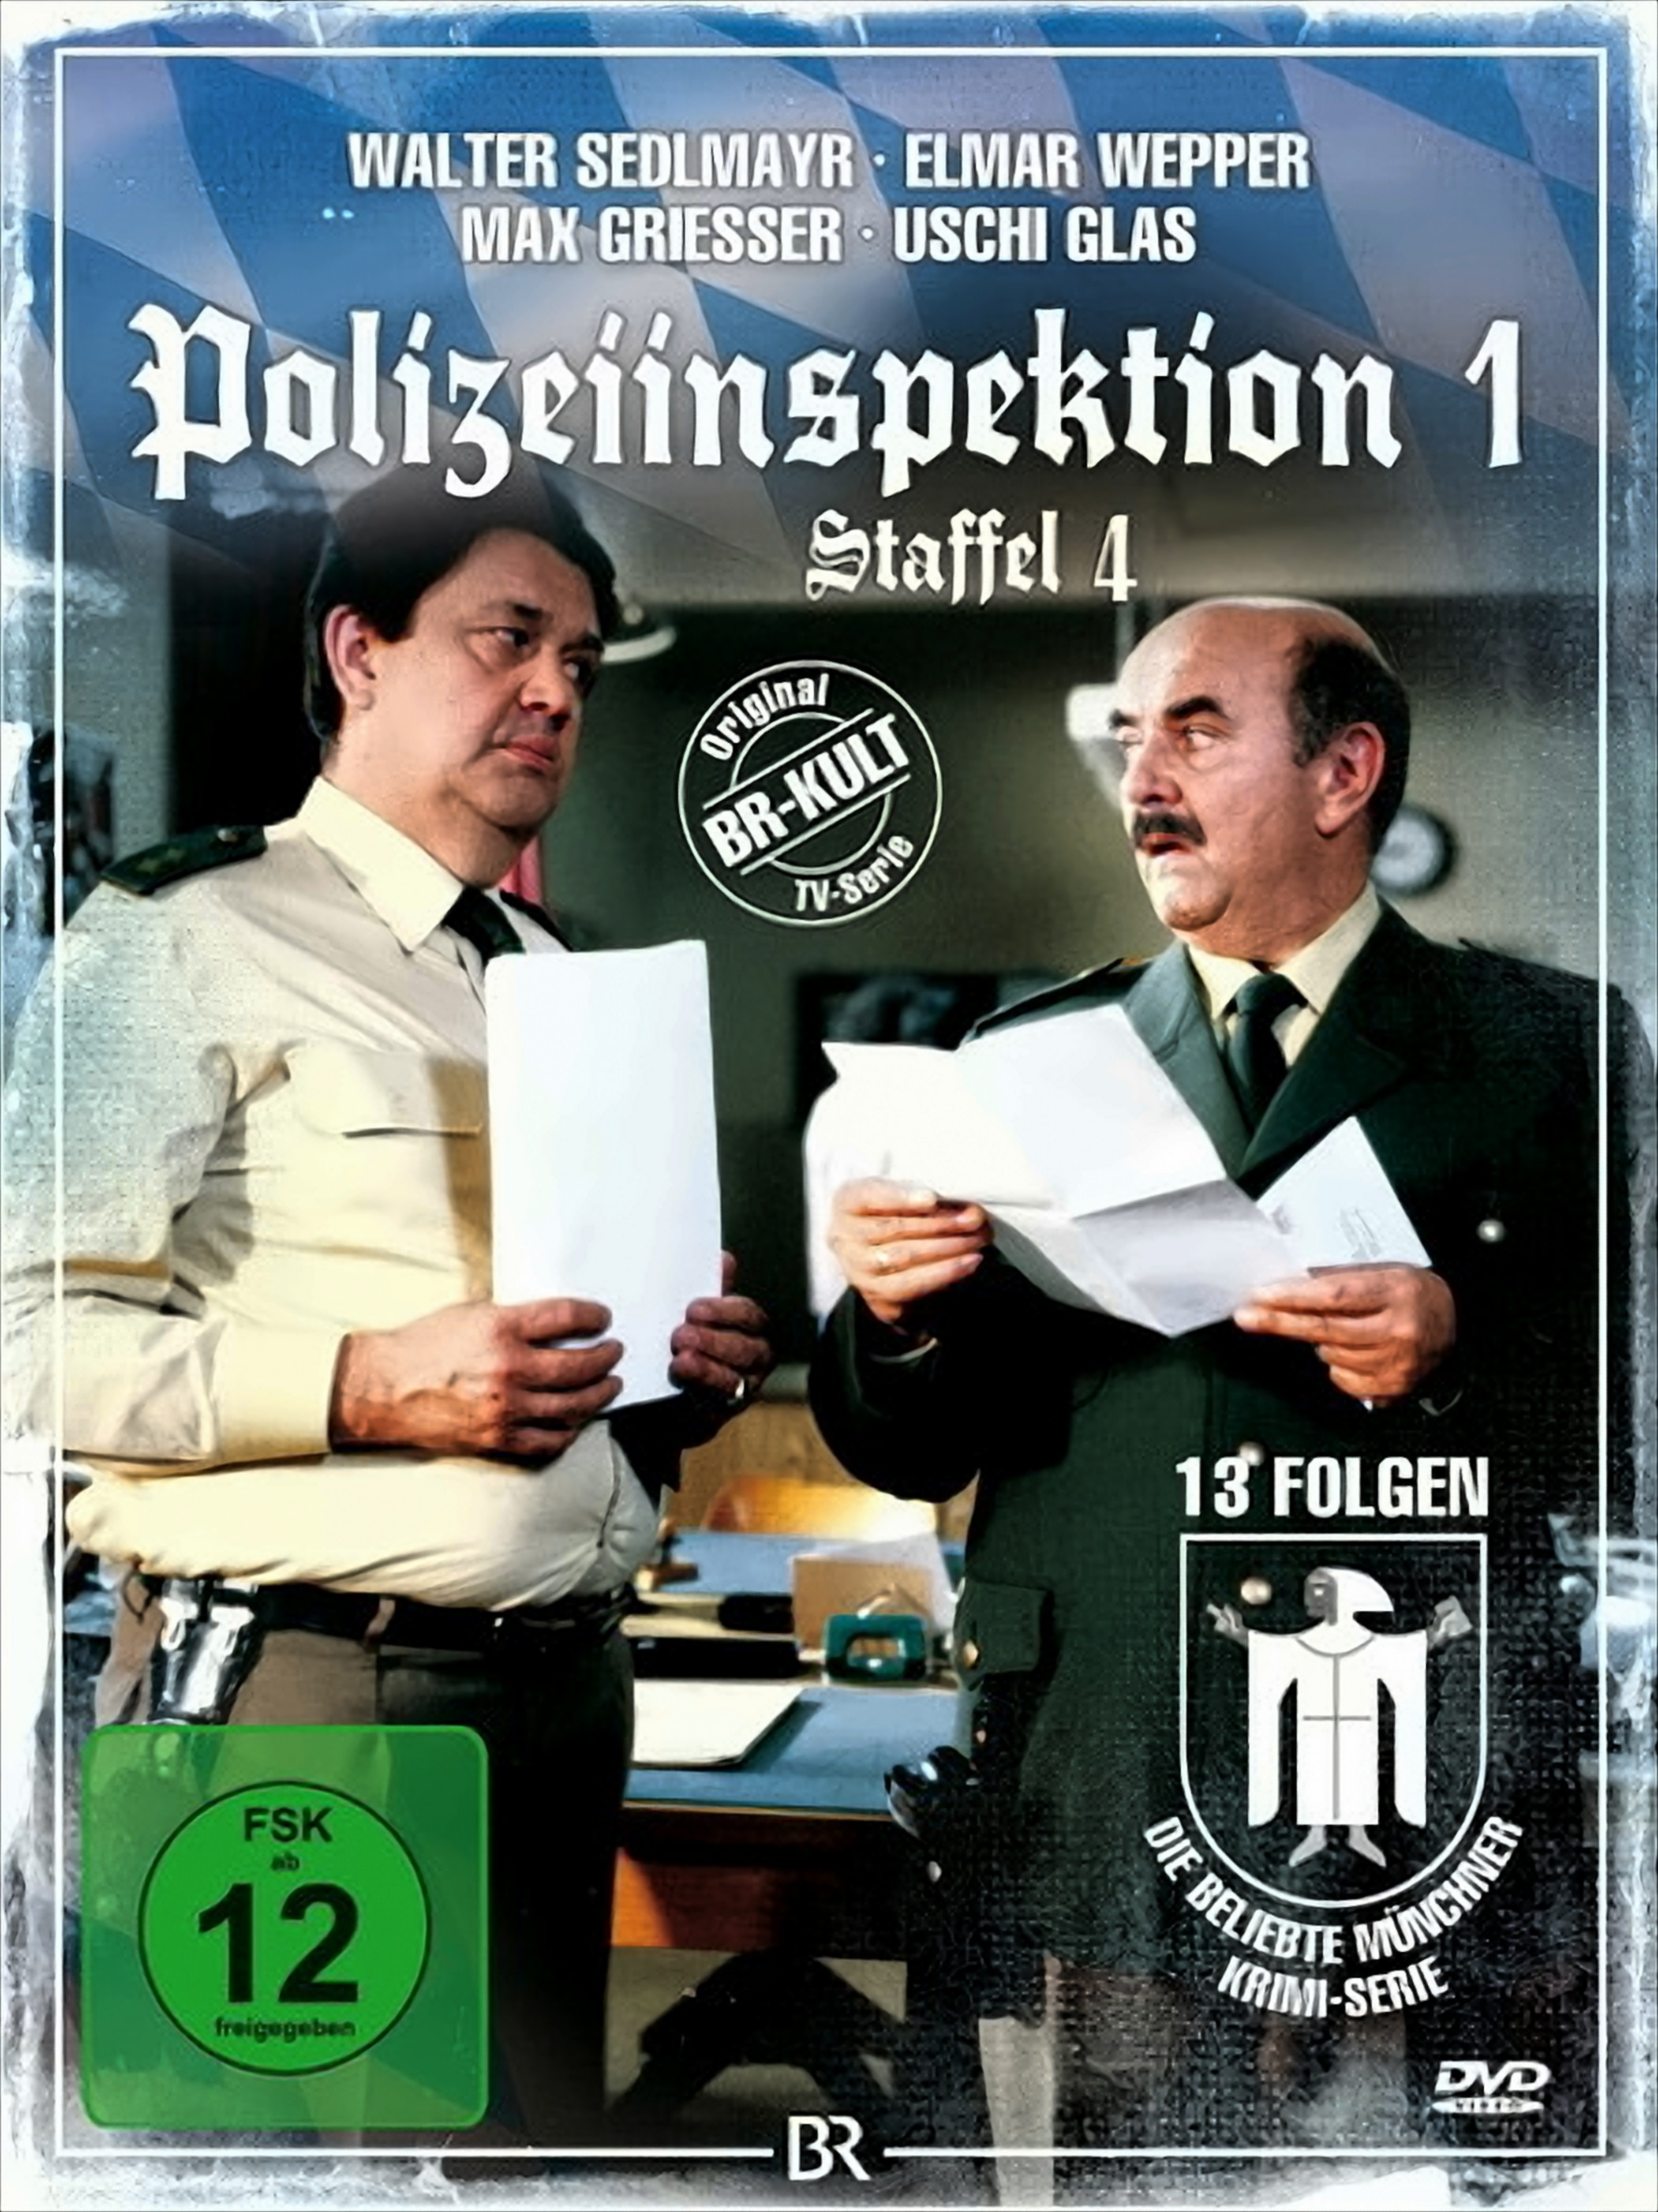 Staffel 1 DVD Polizeiinspektion 04 -